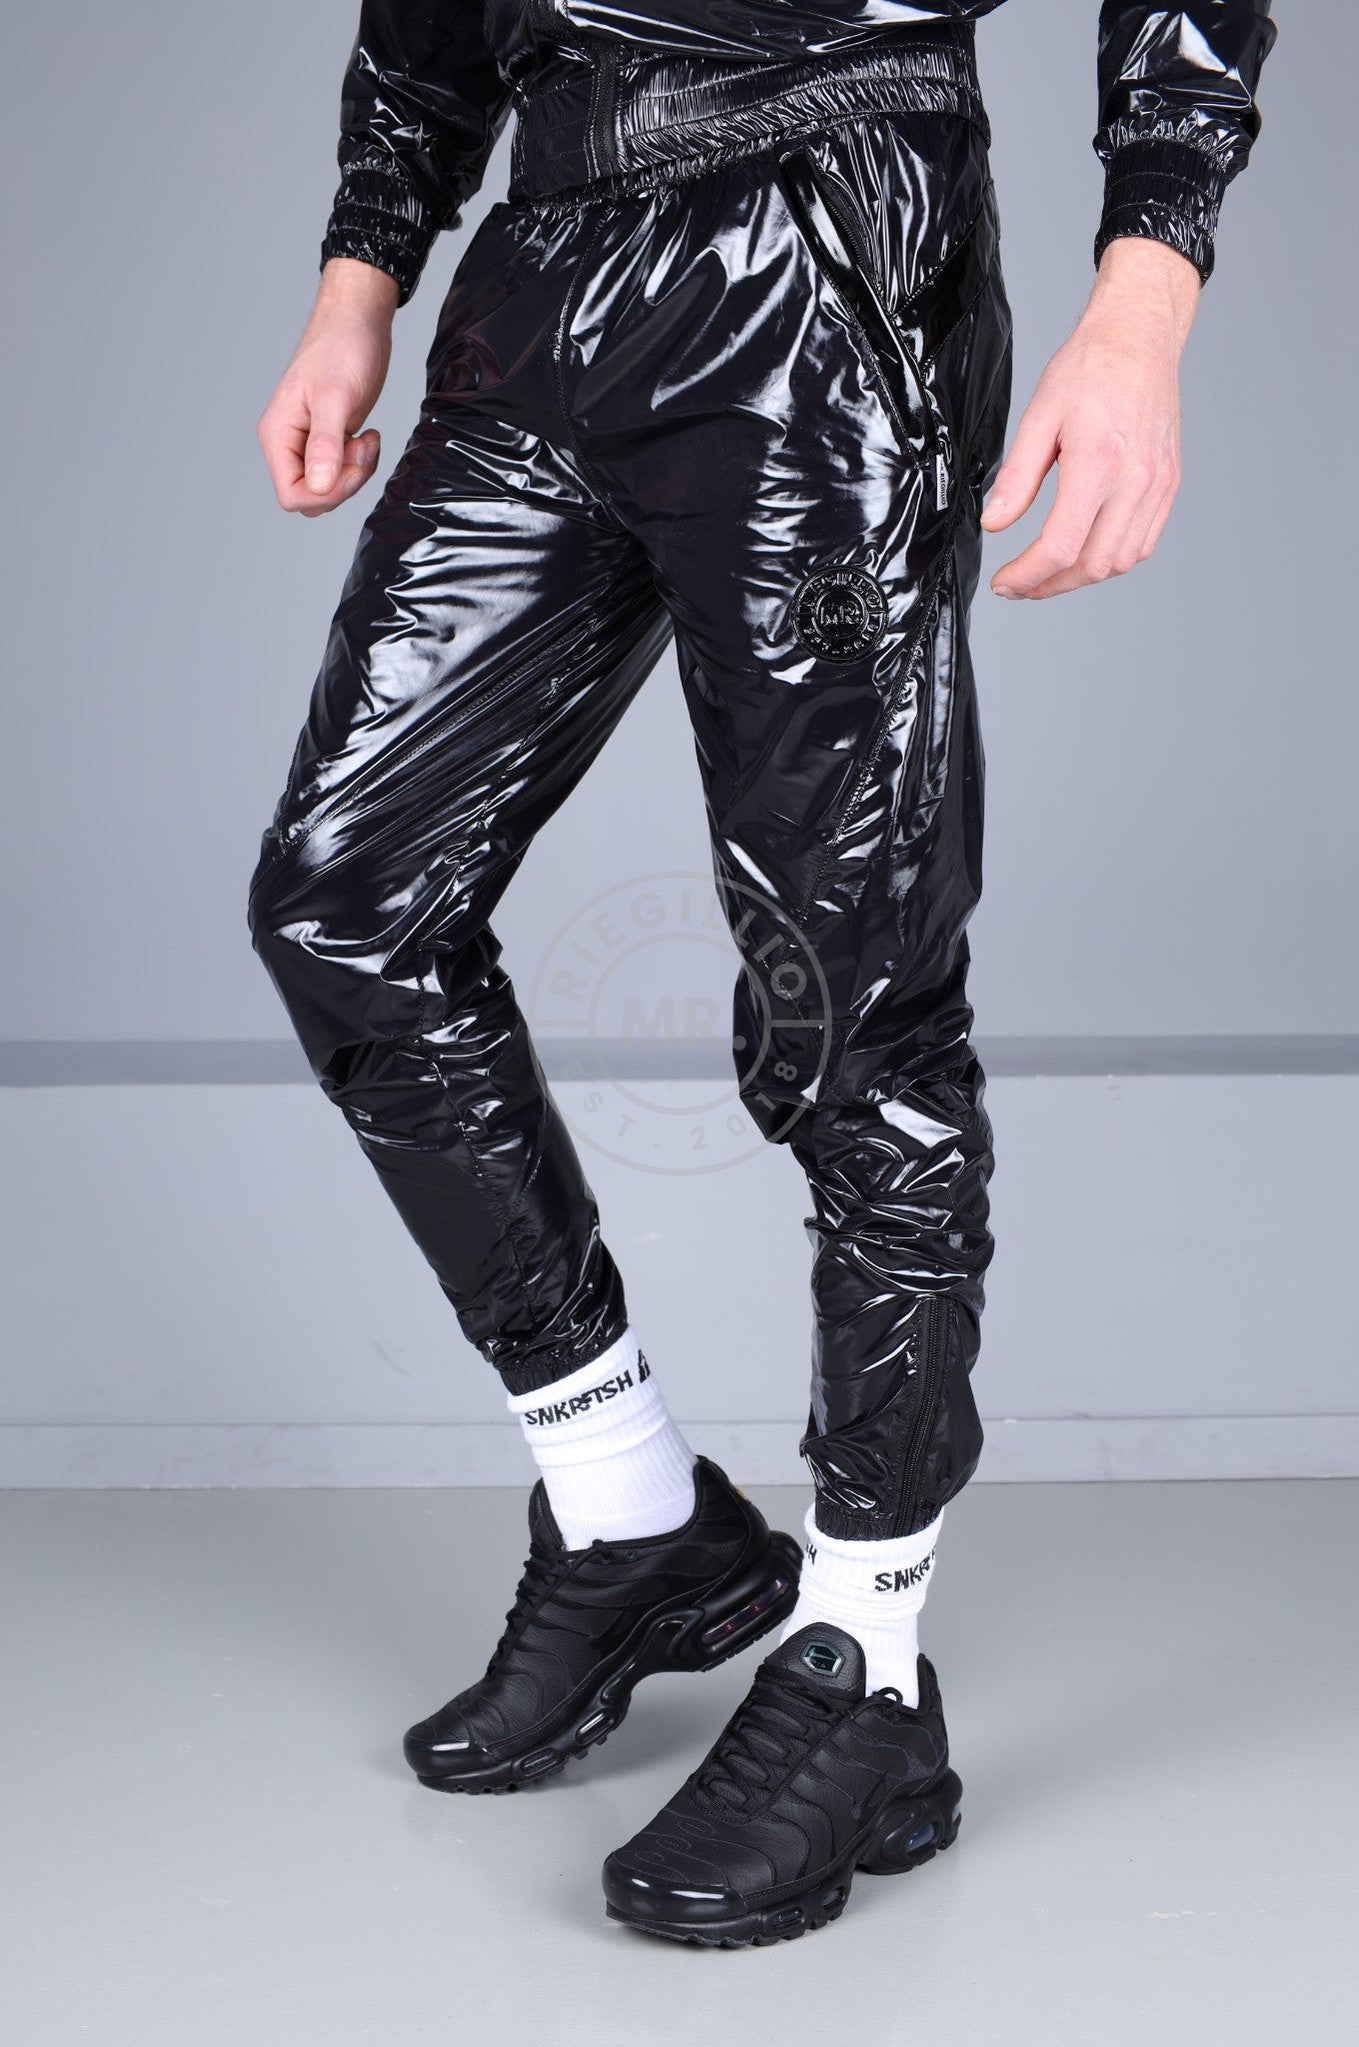 Shiny Nylon 24 Tracksuit Pants - Black-at MR. Riegillio